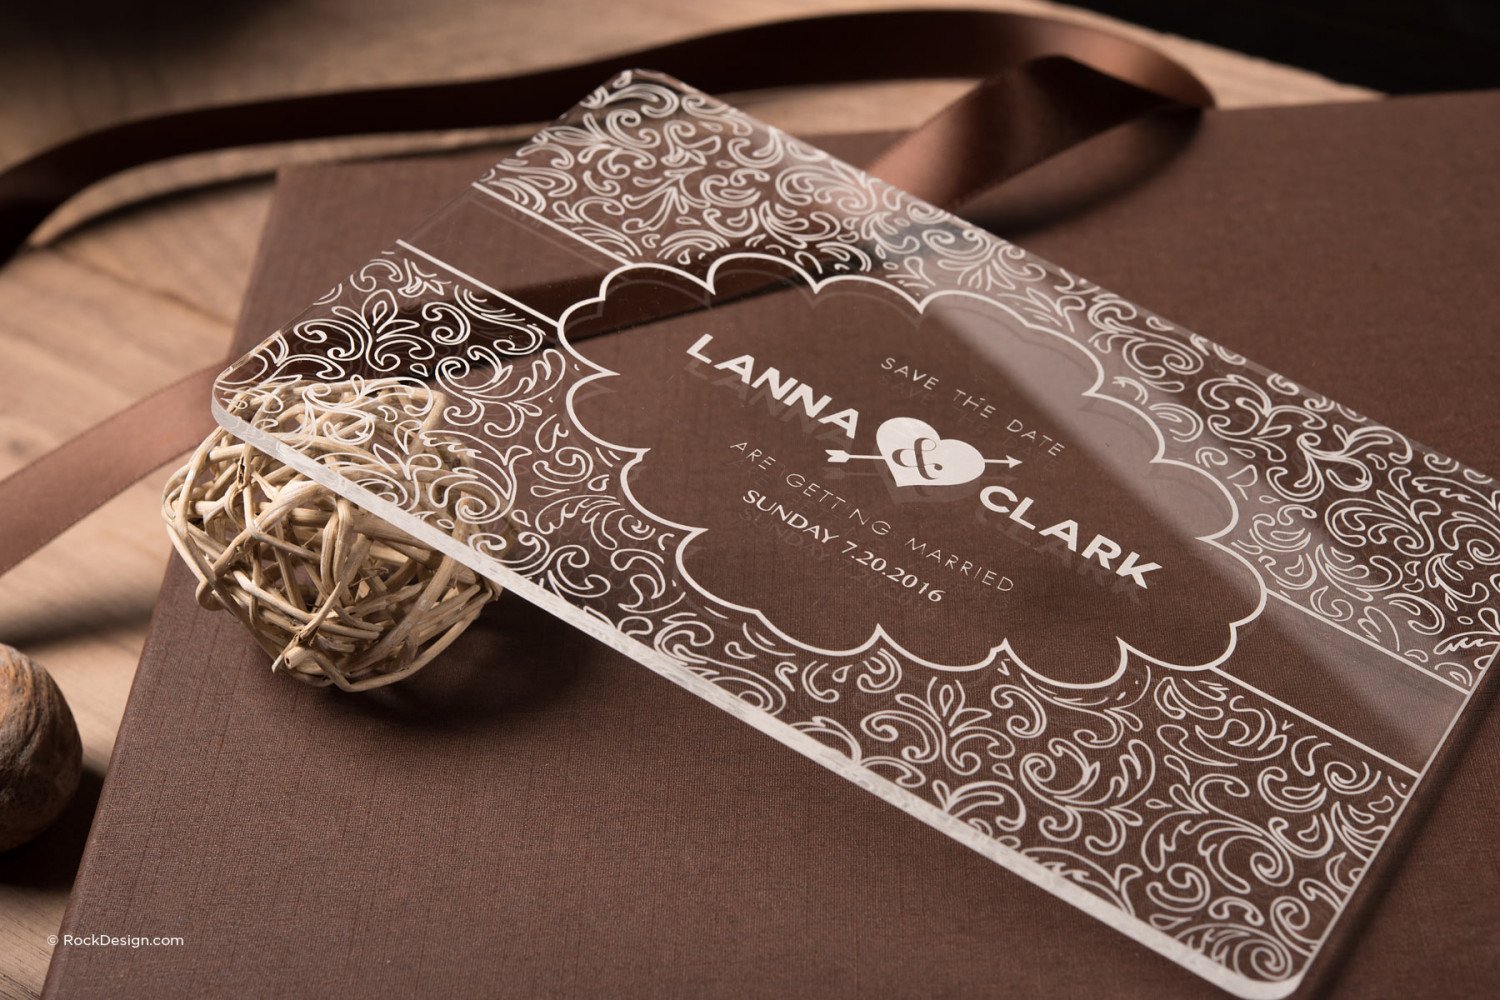 Fancy clear acrylic wedding invitation - Lanna & Clark